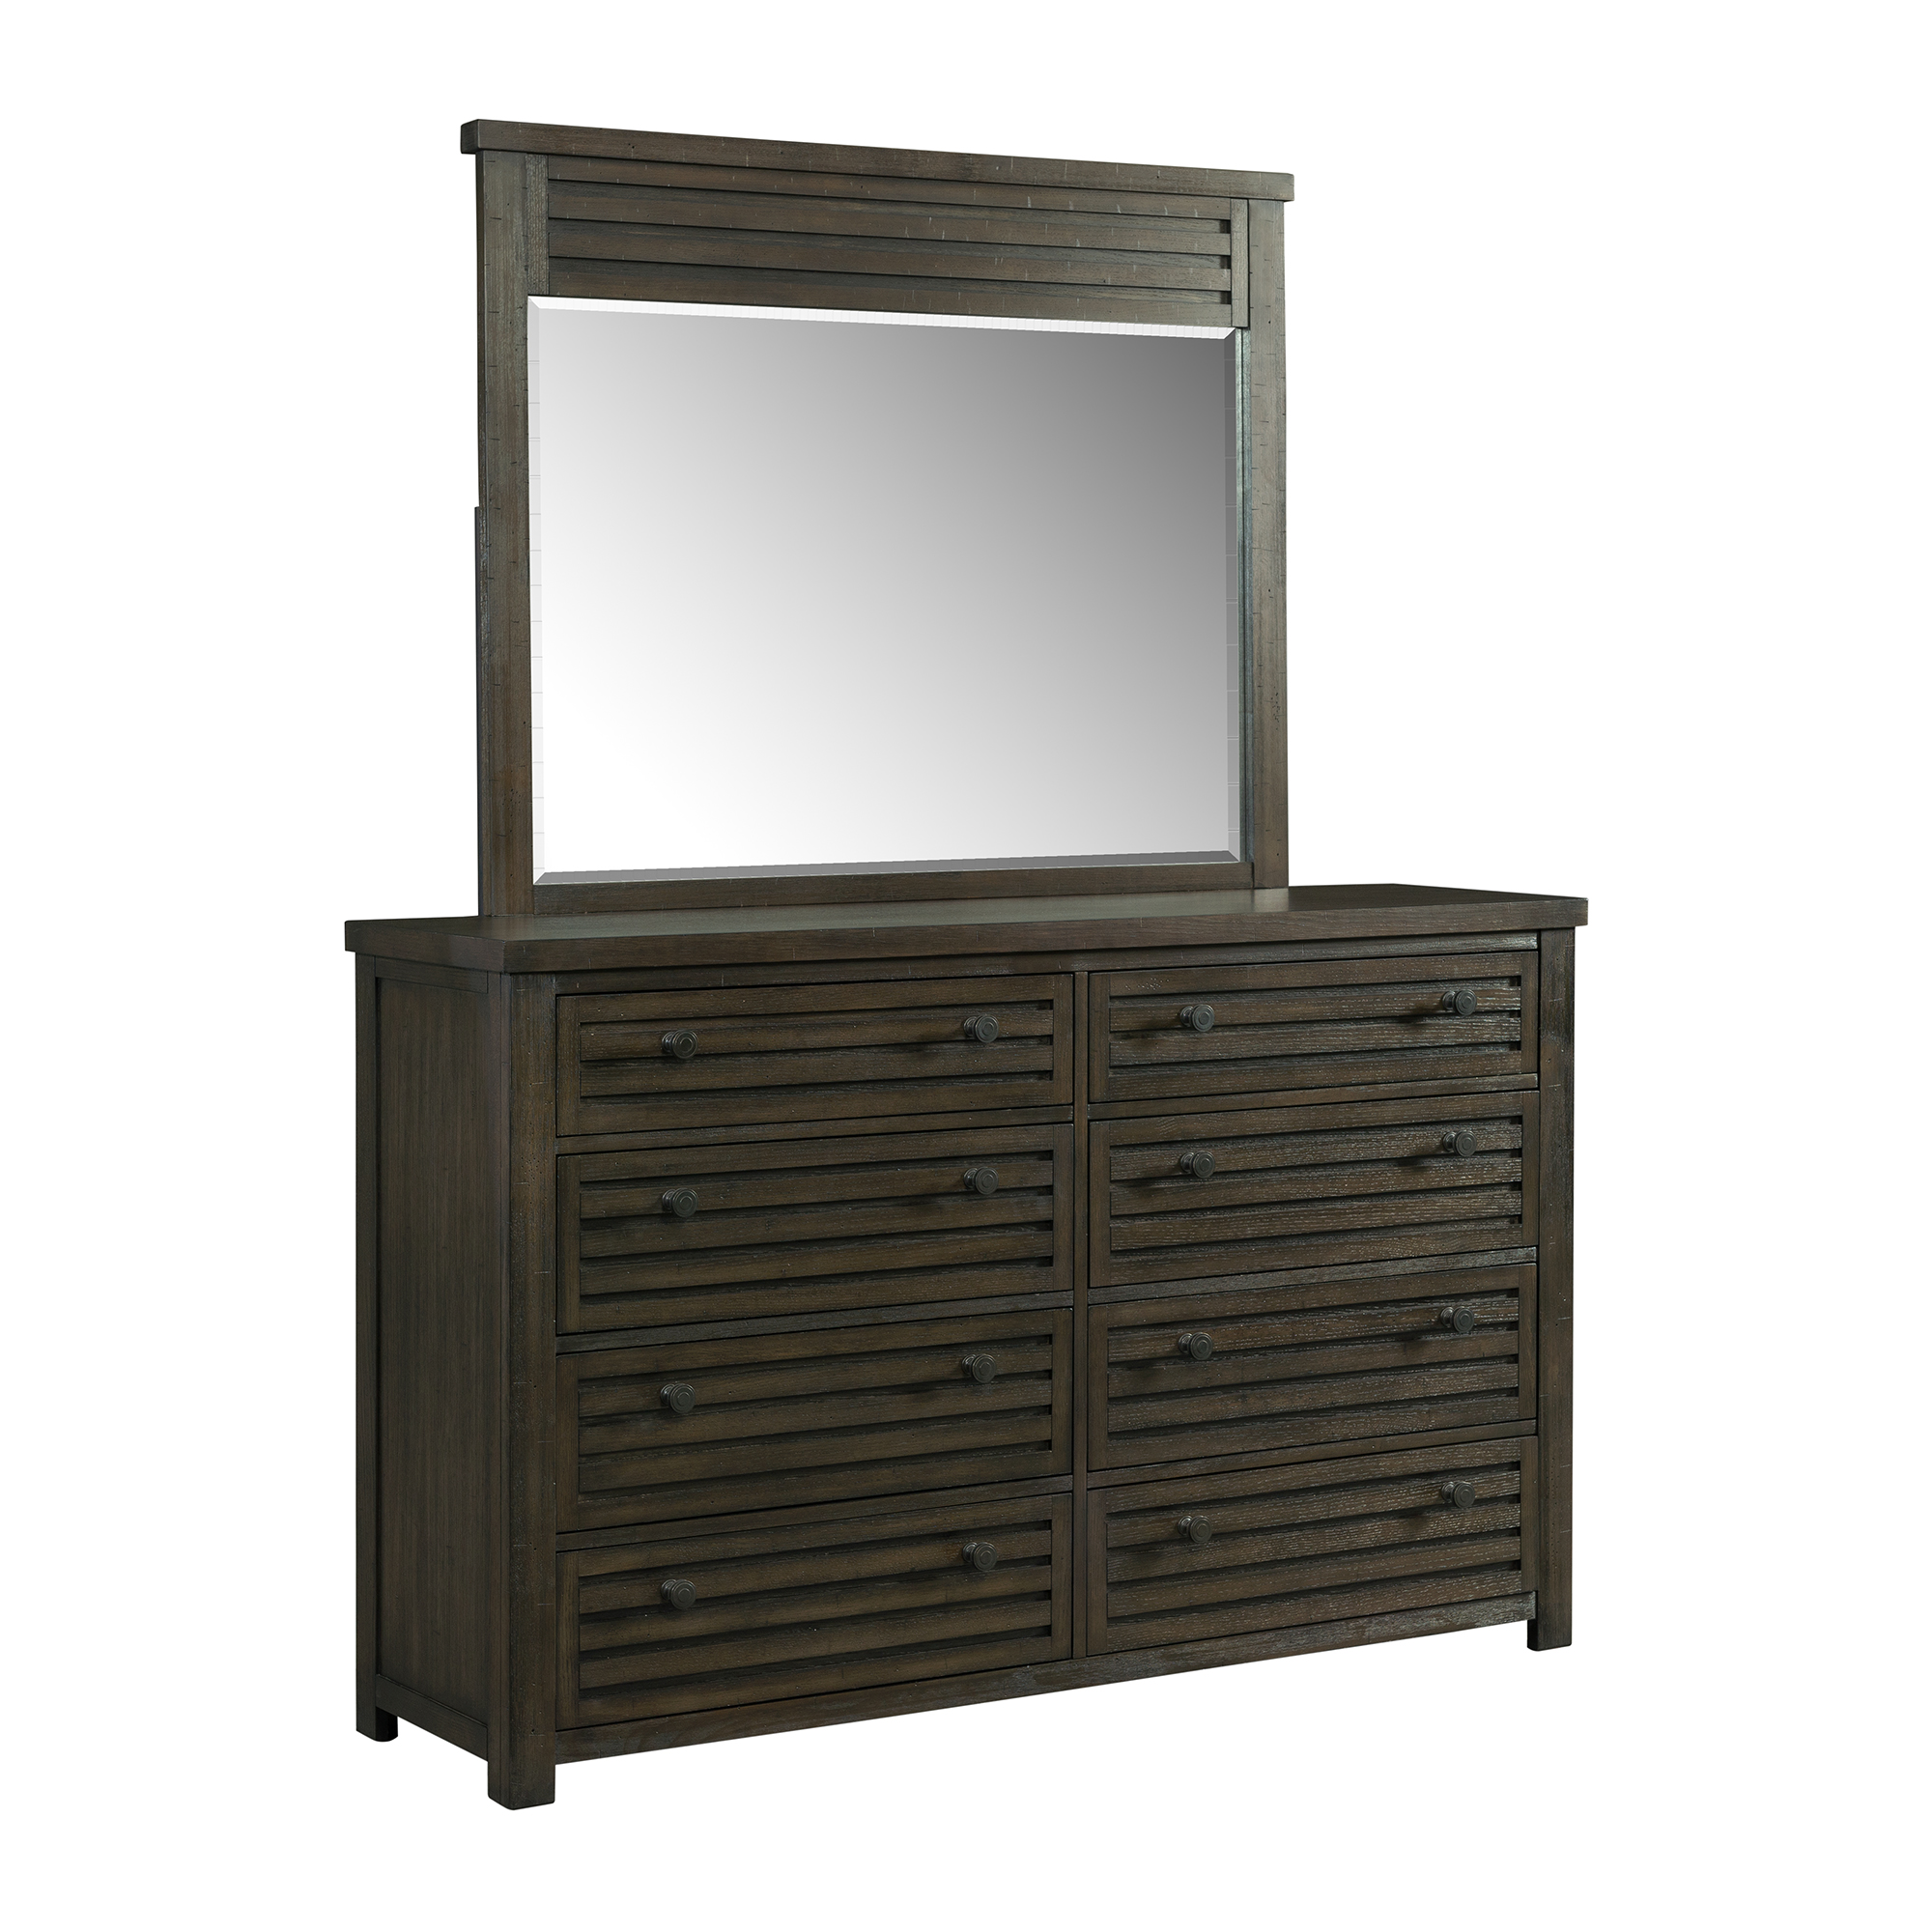 Picket House Furnishings Montego 8-Drawer Dresser And Mirror Set SB600DRMR - image 1 of 12